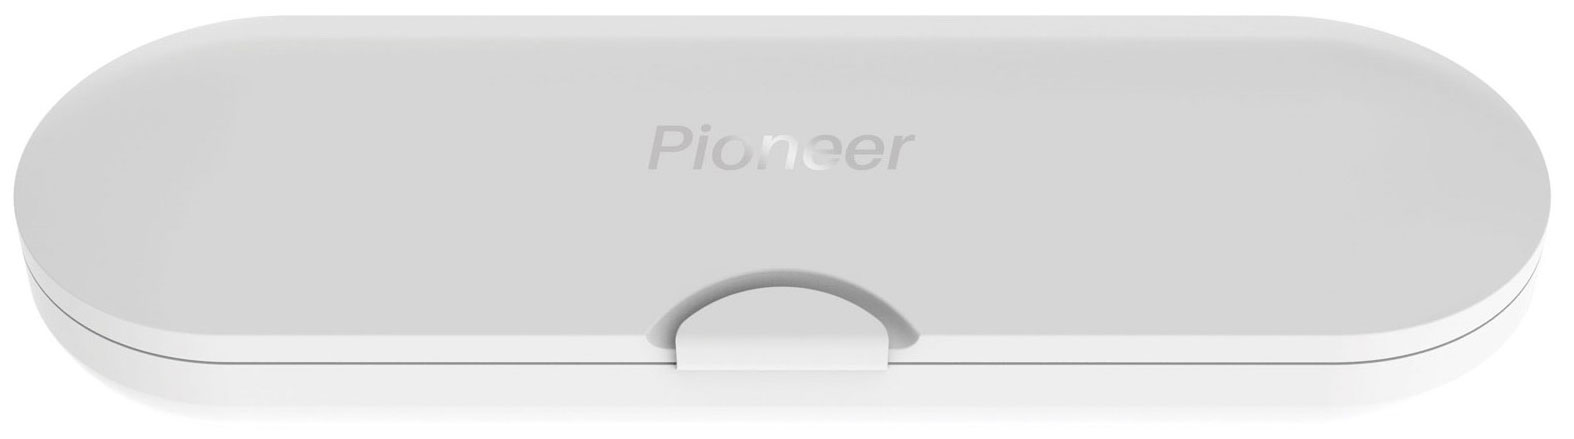 Зубная щетка Pioneer TB-5020